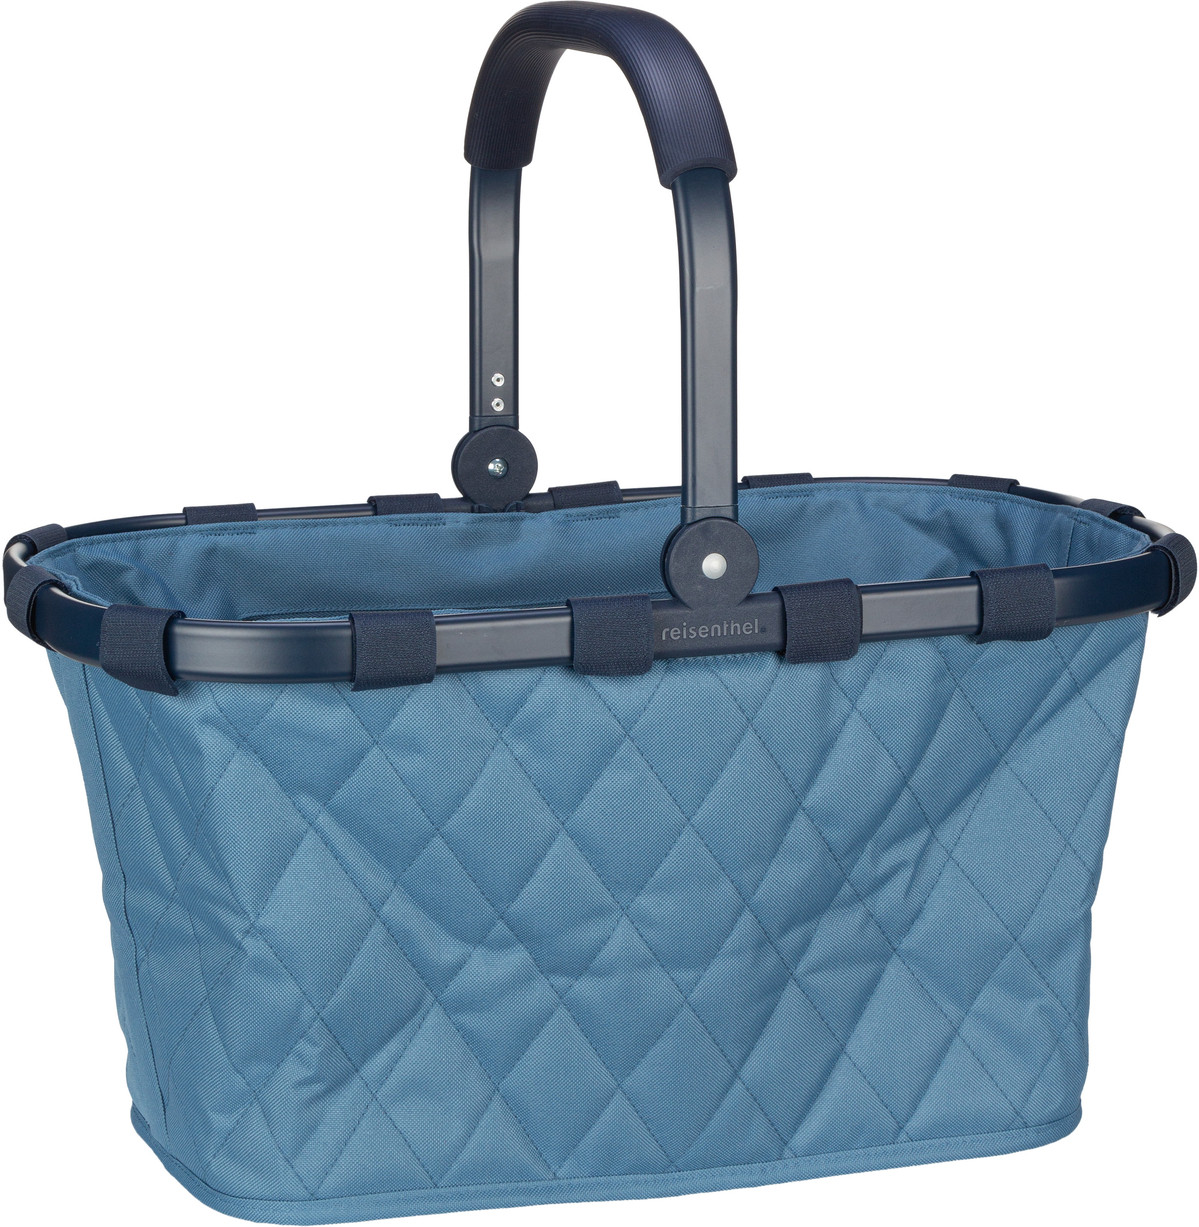 reisenthel carrybag special edition - Rhombus Blue